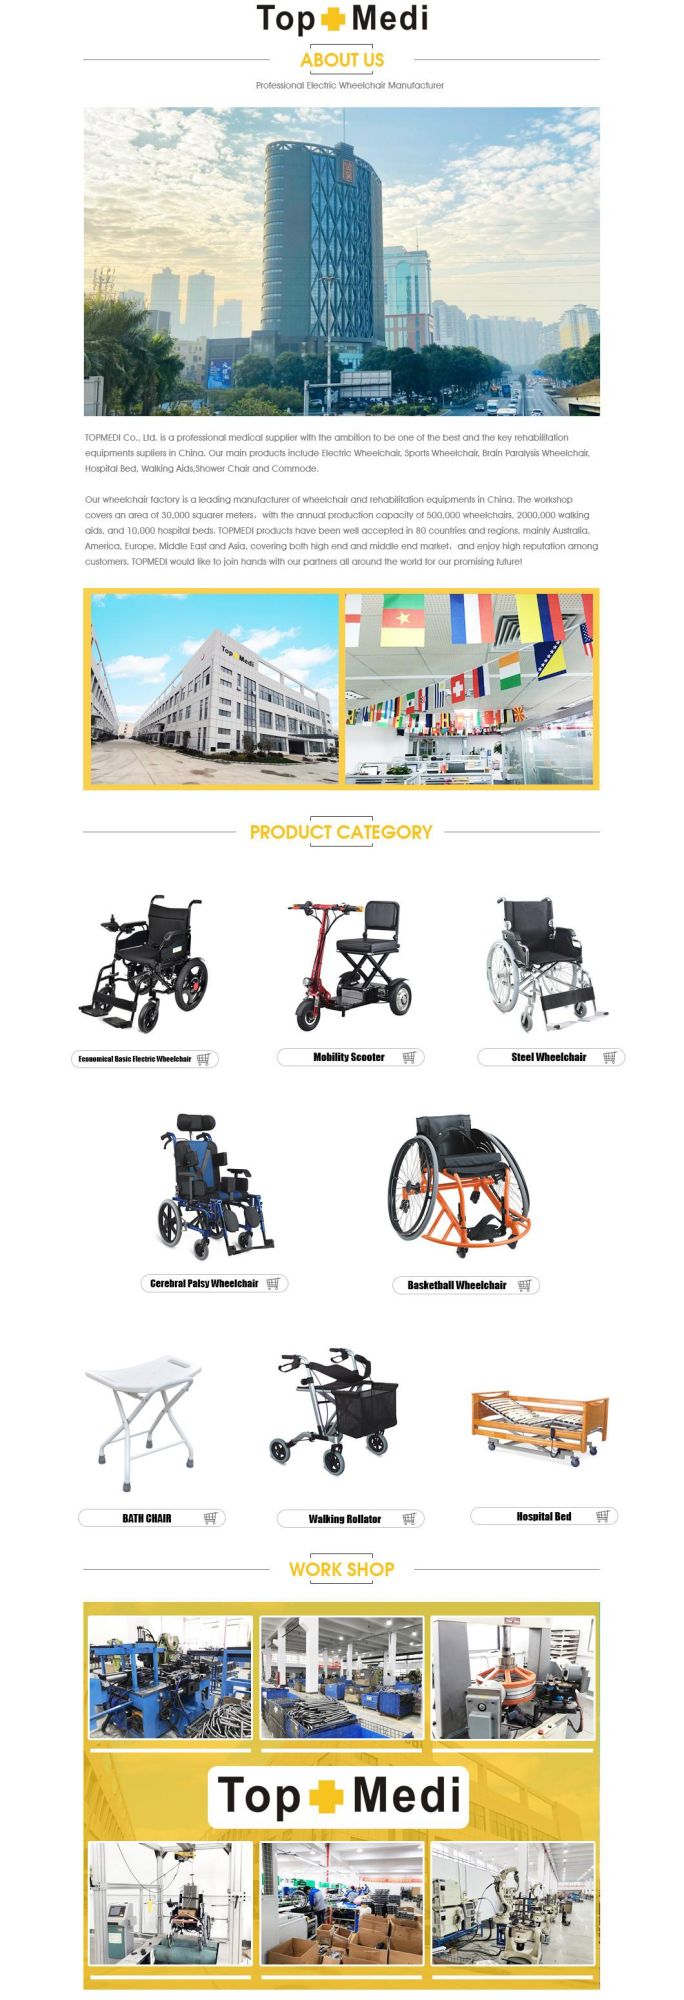 Topmedi Medical Aluminum Badminton Sports Wheelchair